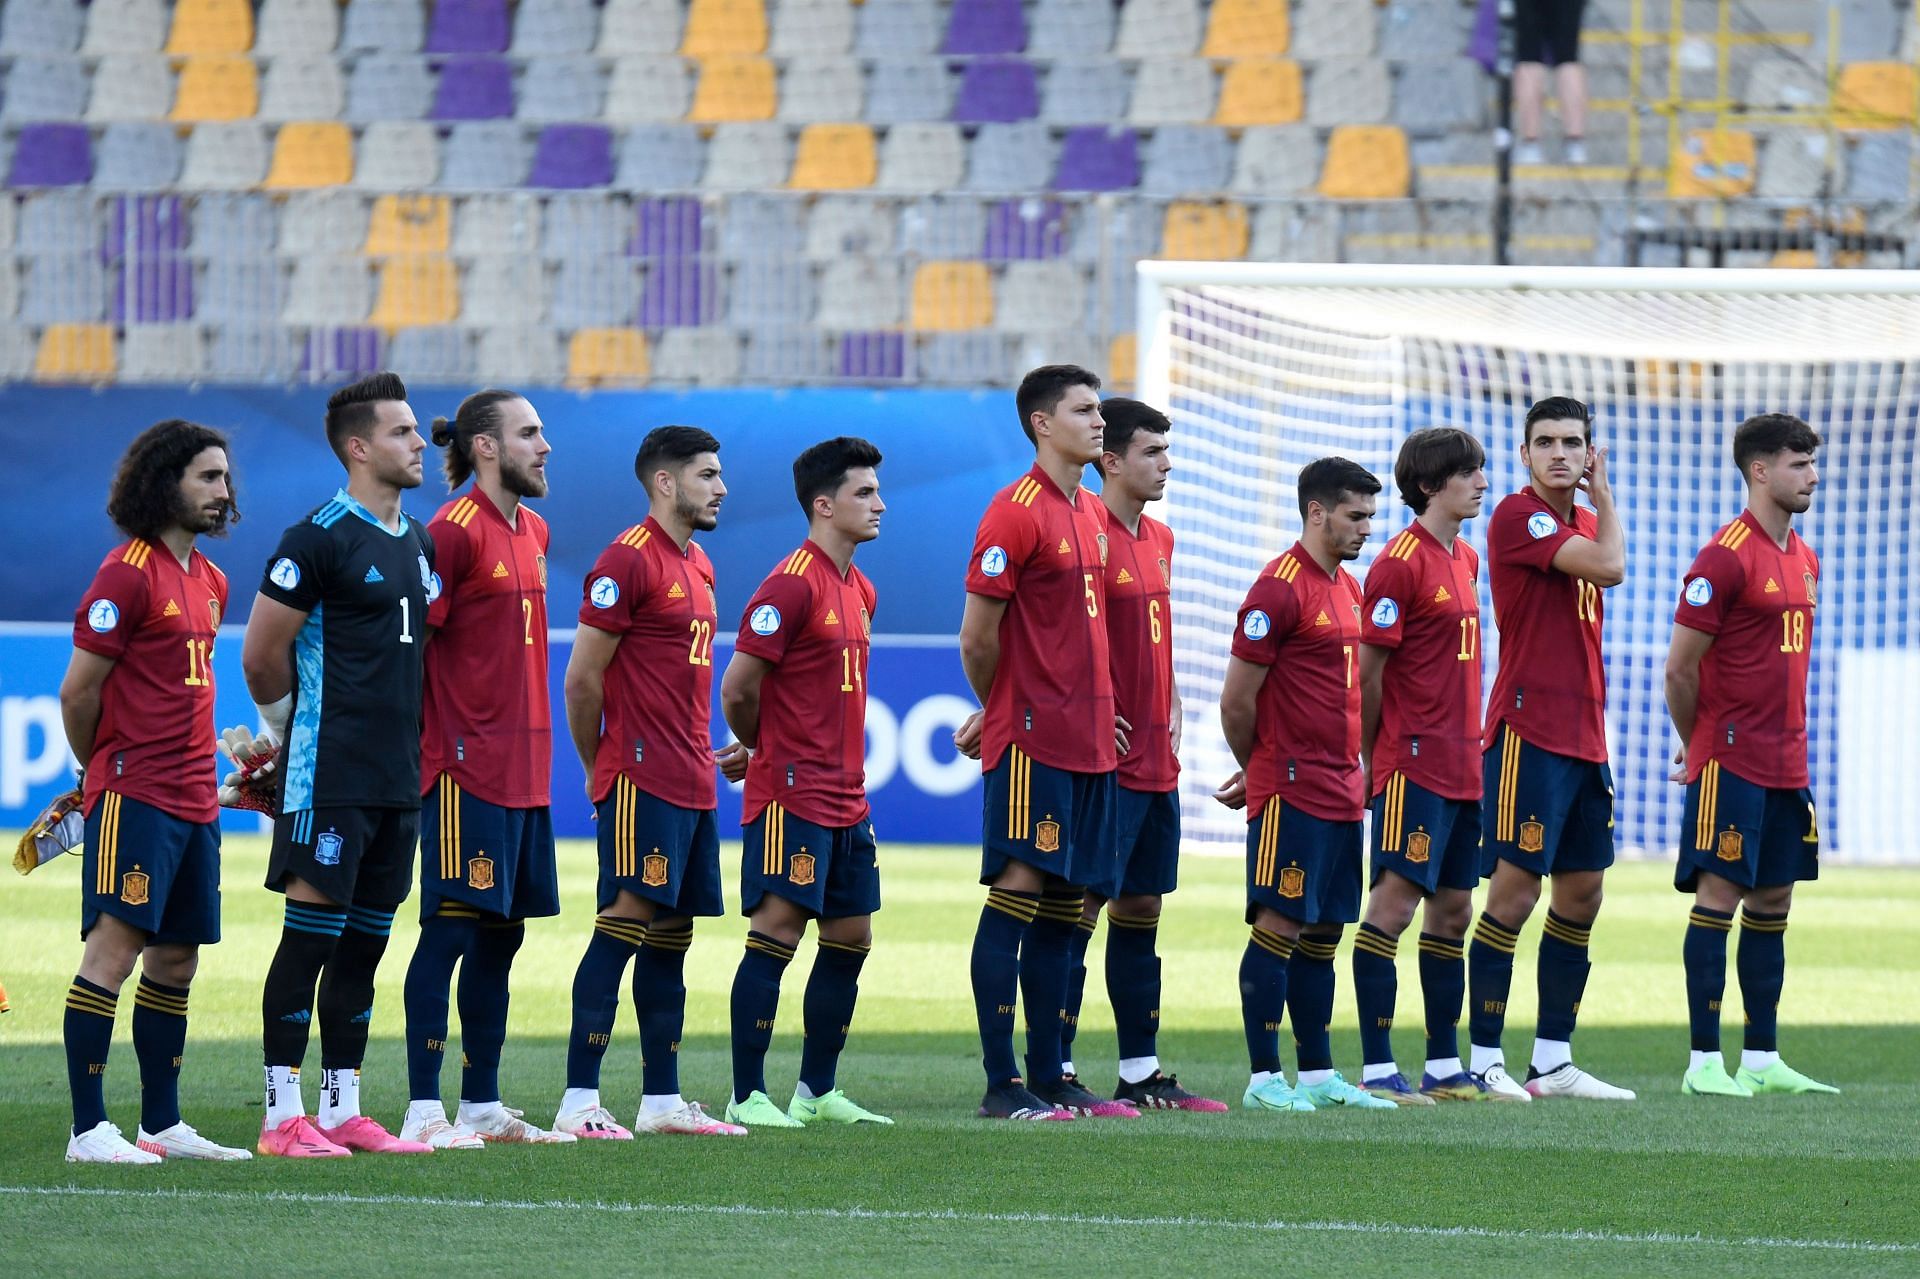 Spain v Portugal - 2021 UEFA European Under-21 Championship Semi-finals